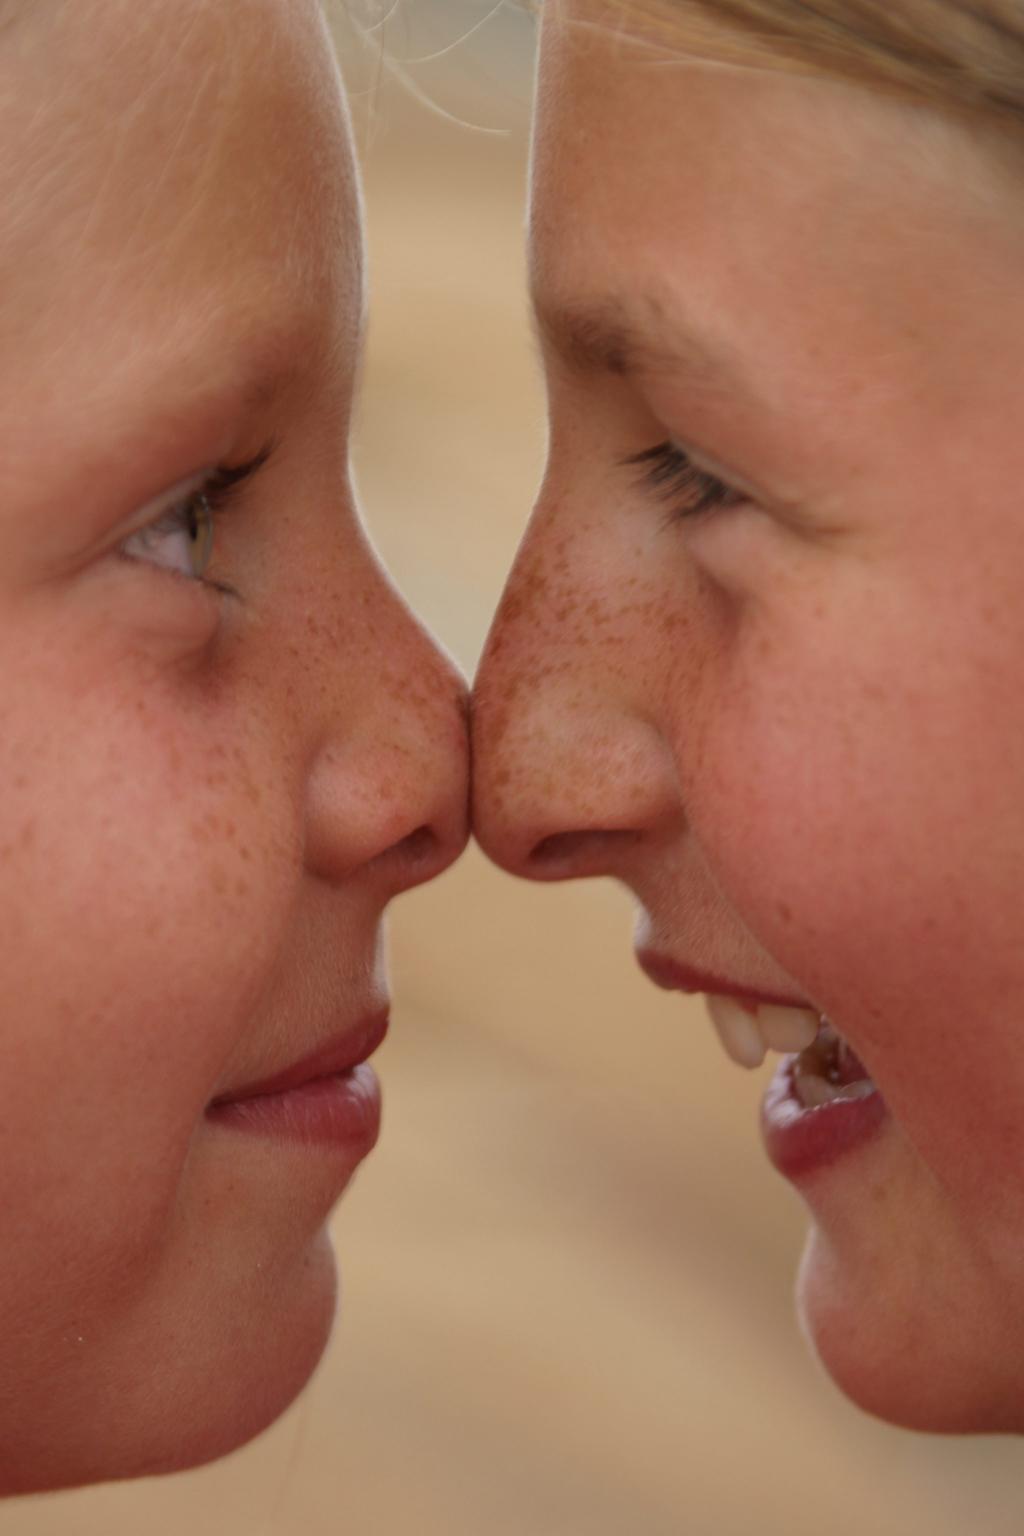 To barn som pressar nasane mot kvarandre. Foto.